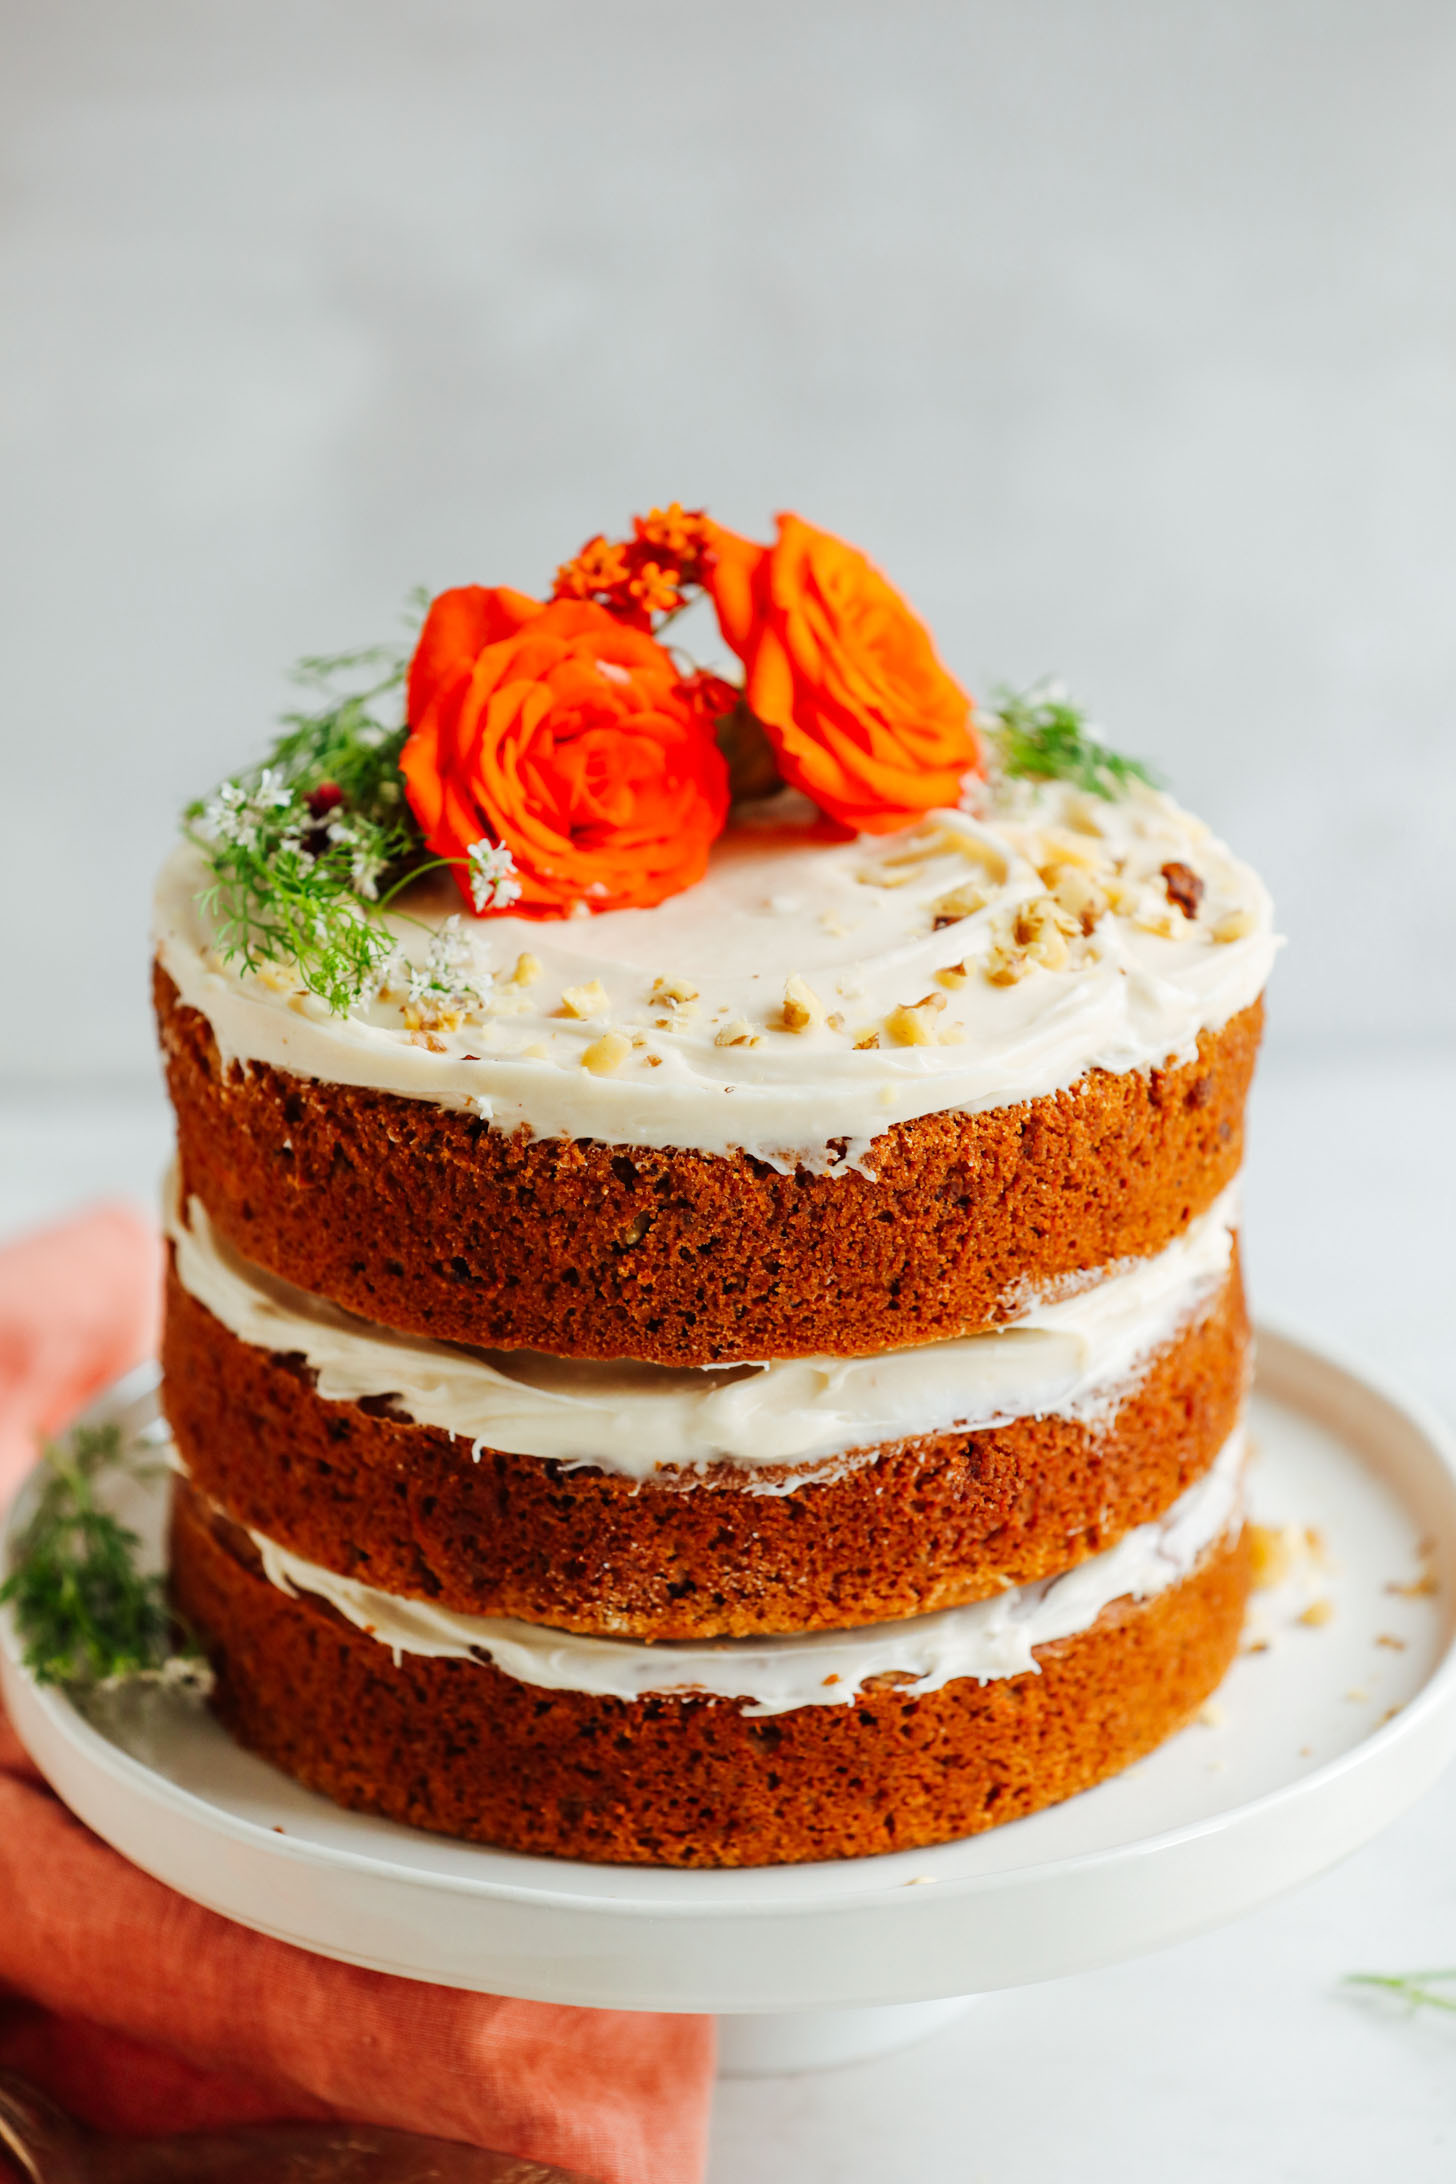 Vegetarian Birthday Cake Recipes
 Vegan Gluten Free Carrot Cake